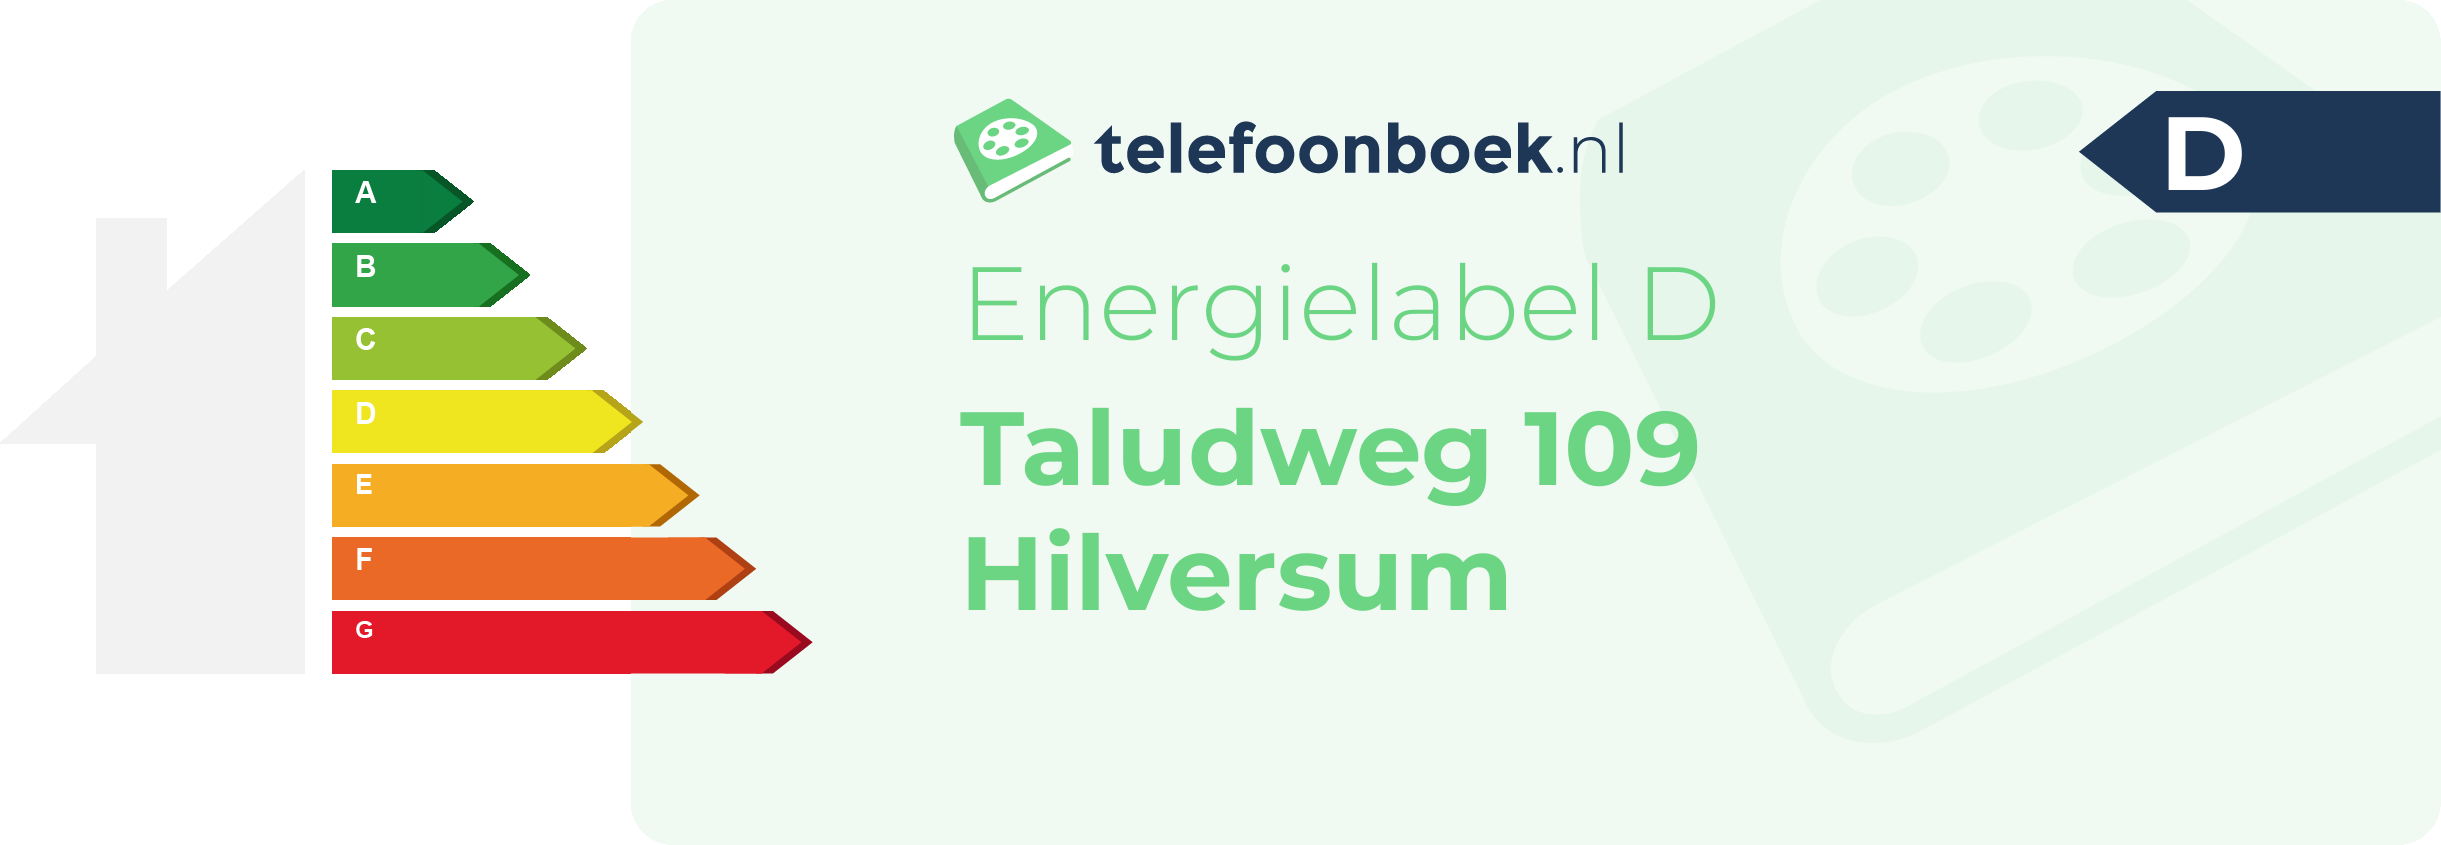 Energielabel Taludweg 109 Hilversum